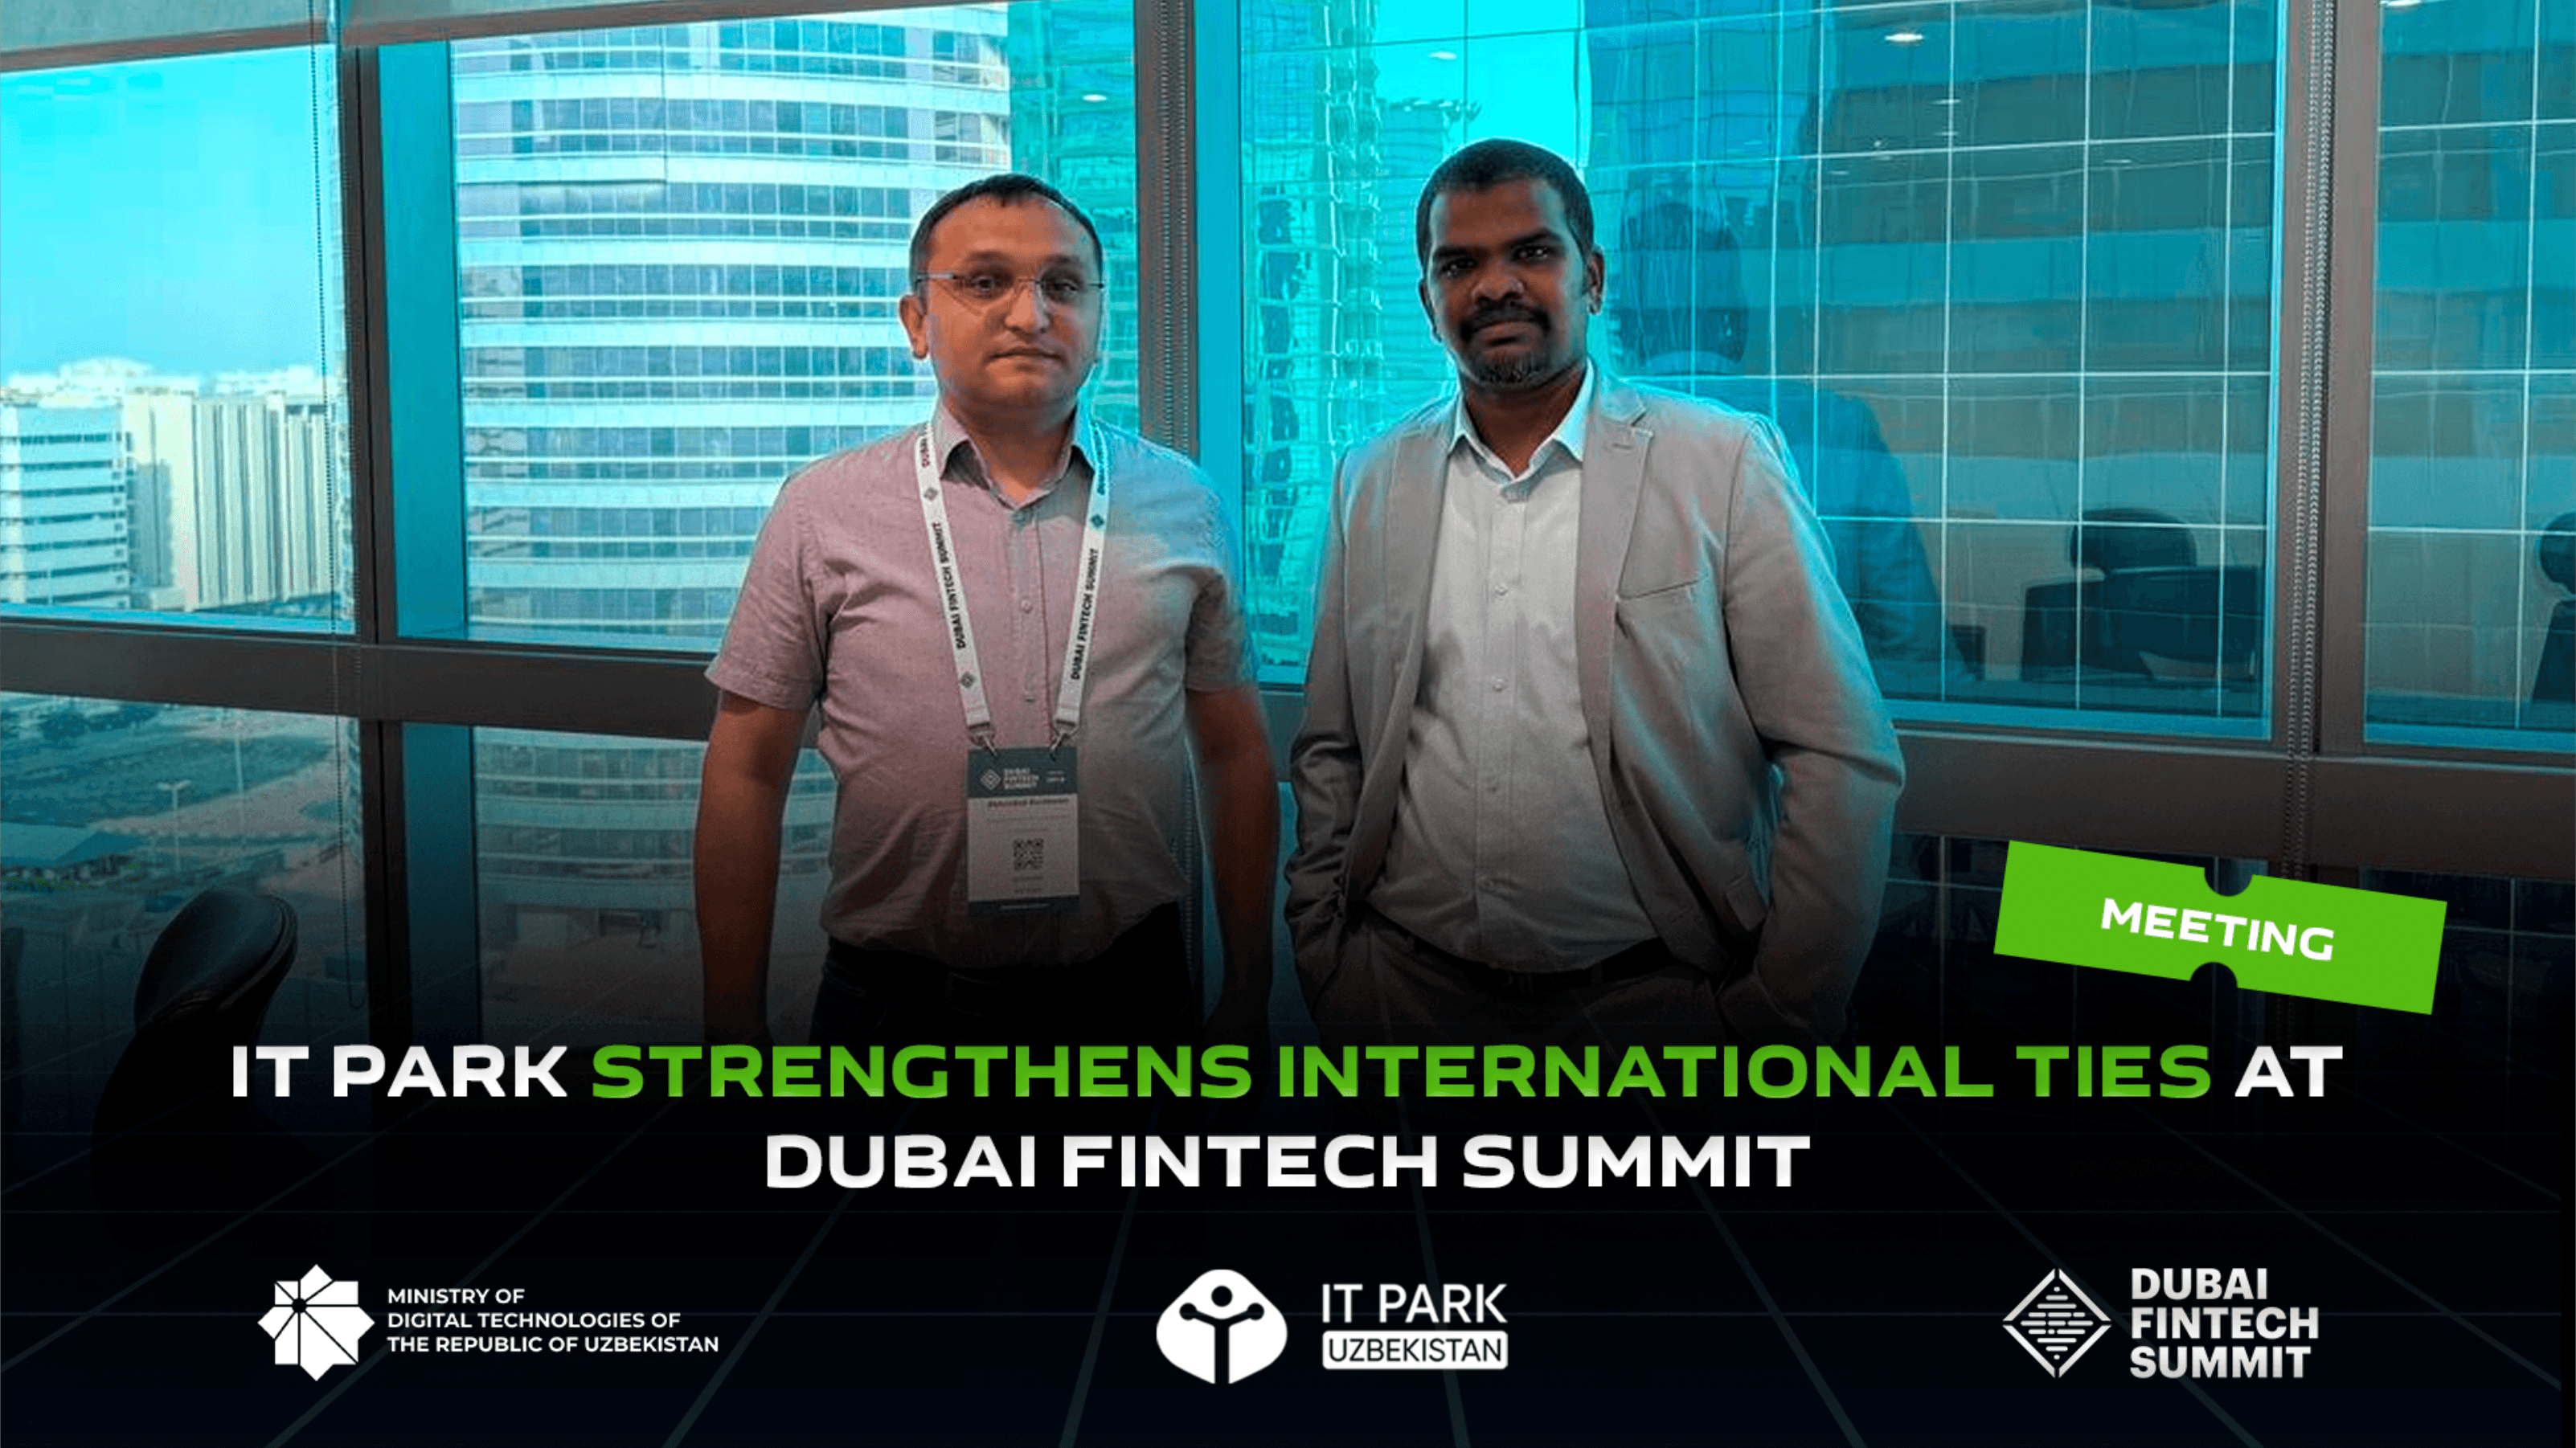 IT Park is strengthening international ties at Dubai Fintech Summit